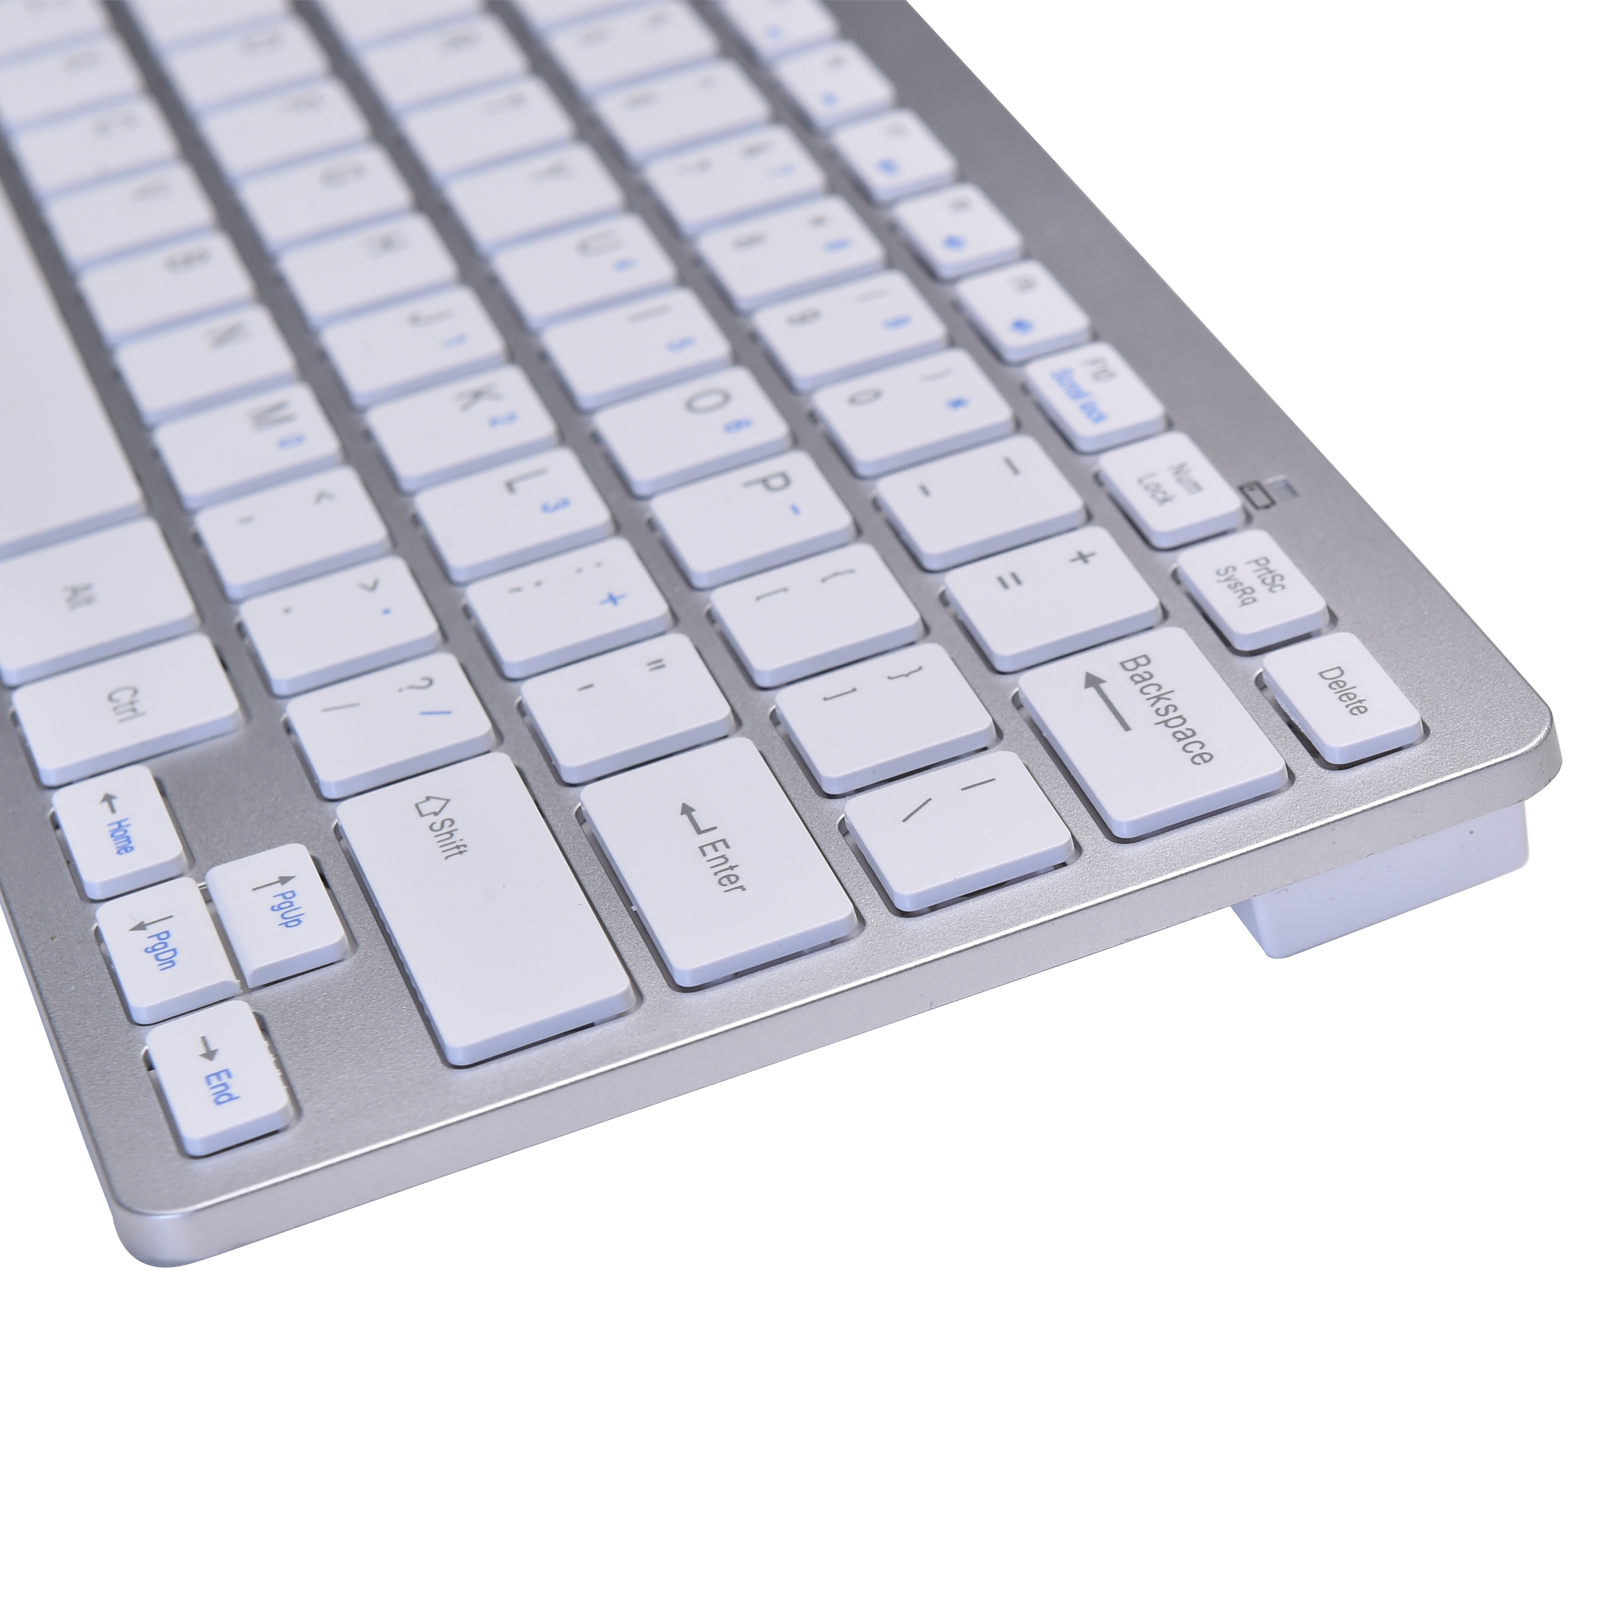 iKKEGOL Mini USB Slim Wired 78-Key Small Compact Keyboard